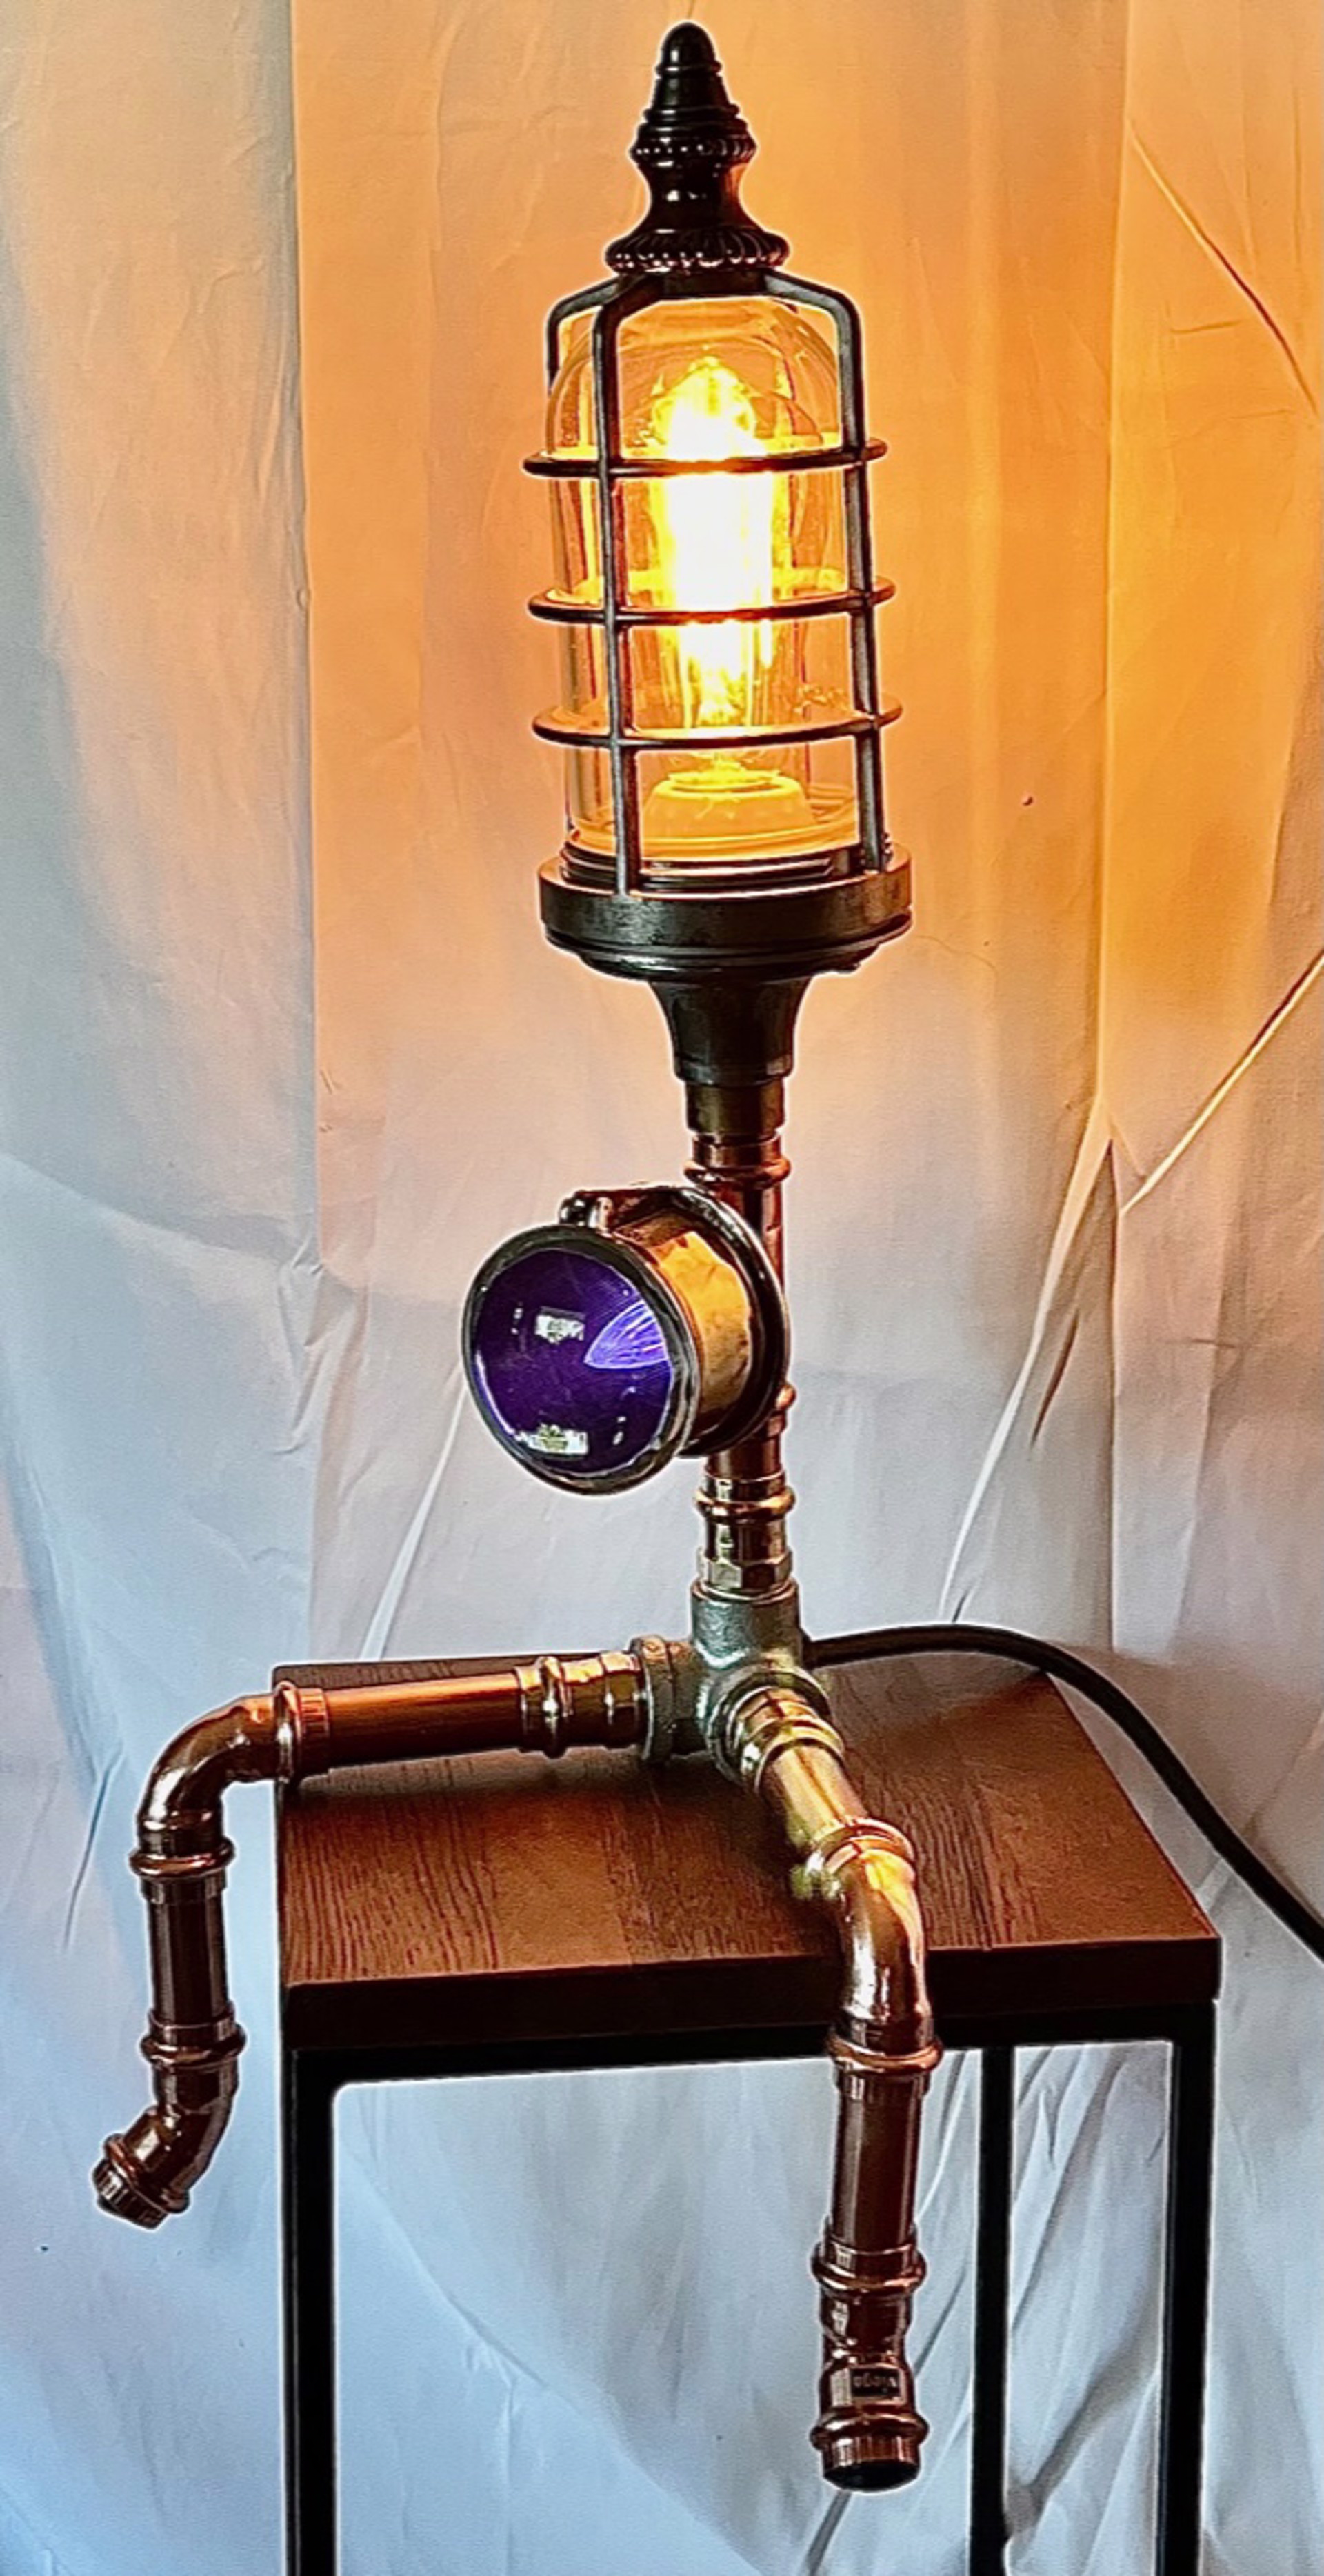 Martian Lamp Holder #17 by Robert Hilton